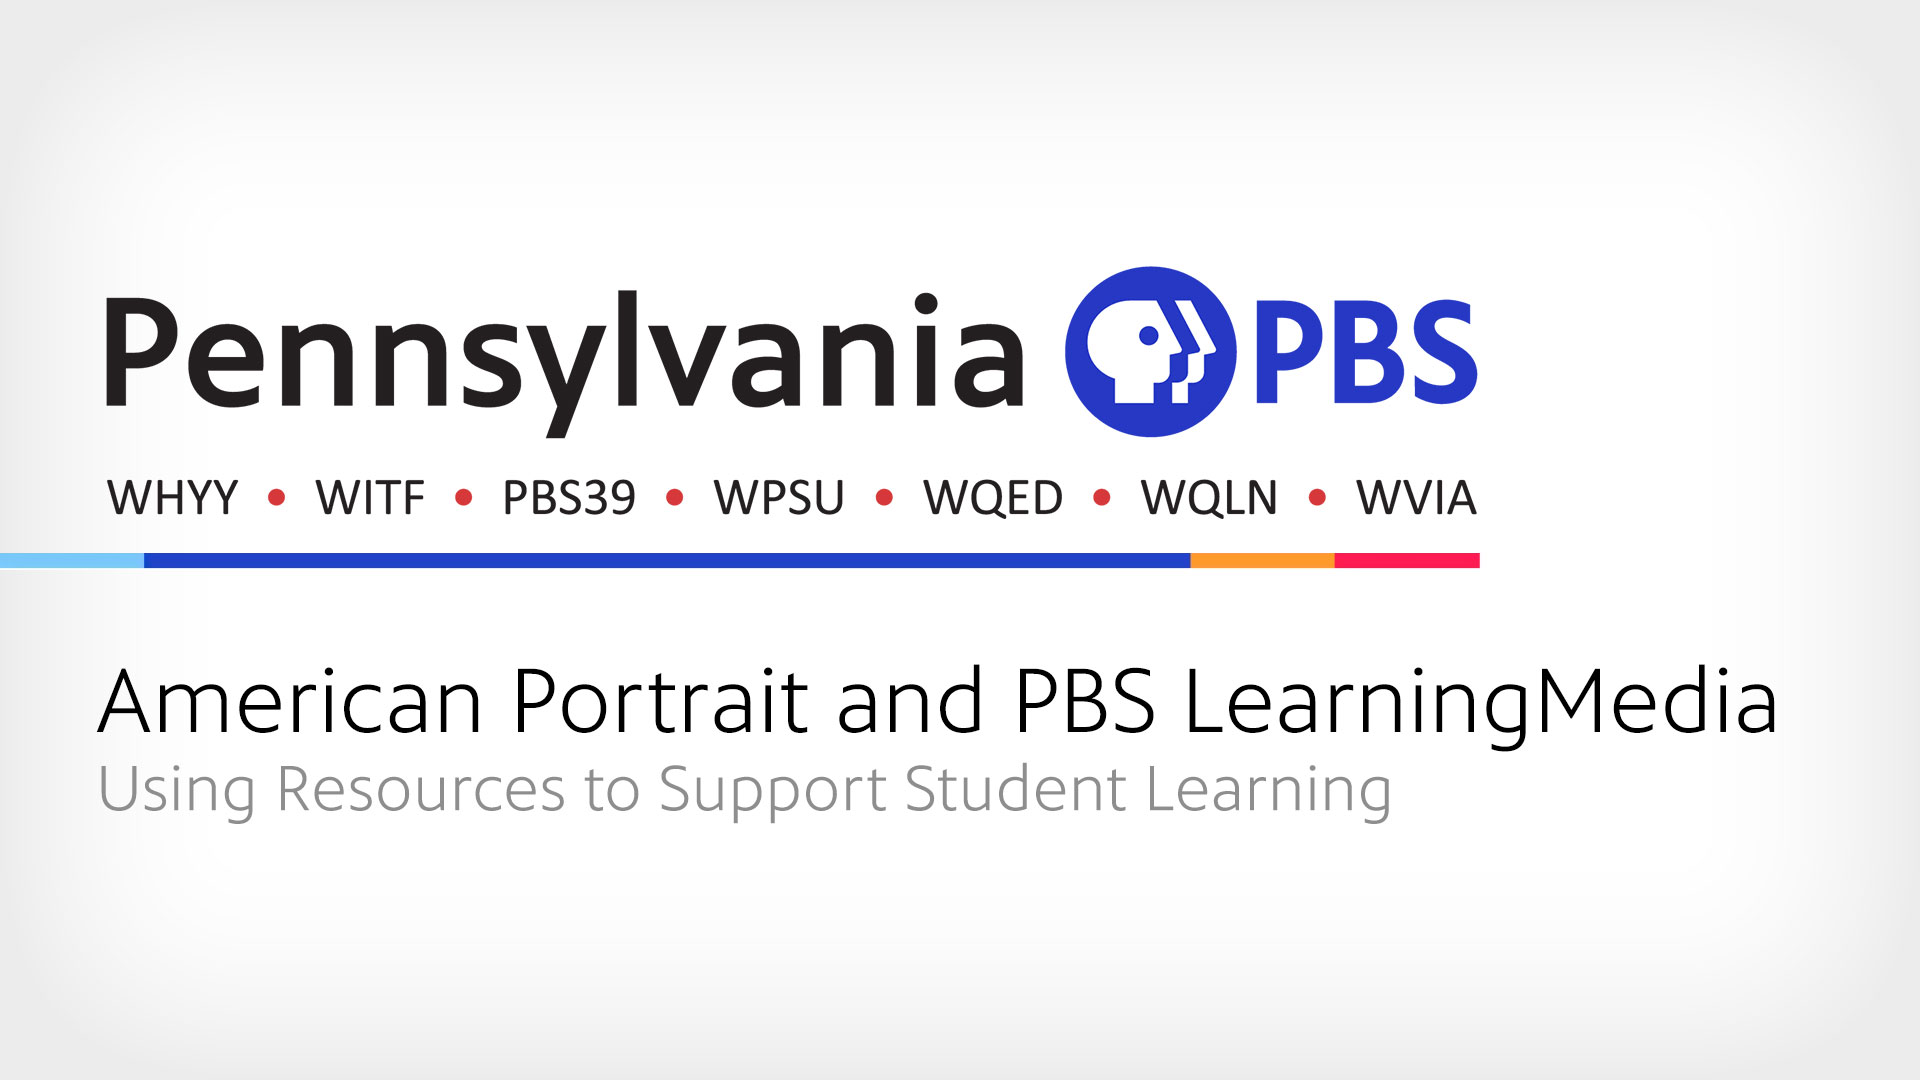 American Portrait and PBS LearningMedia